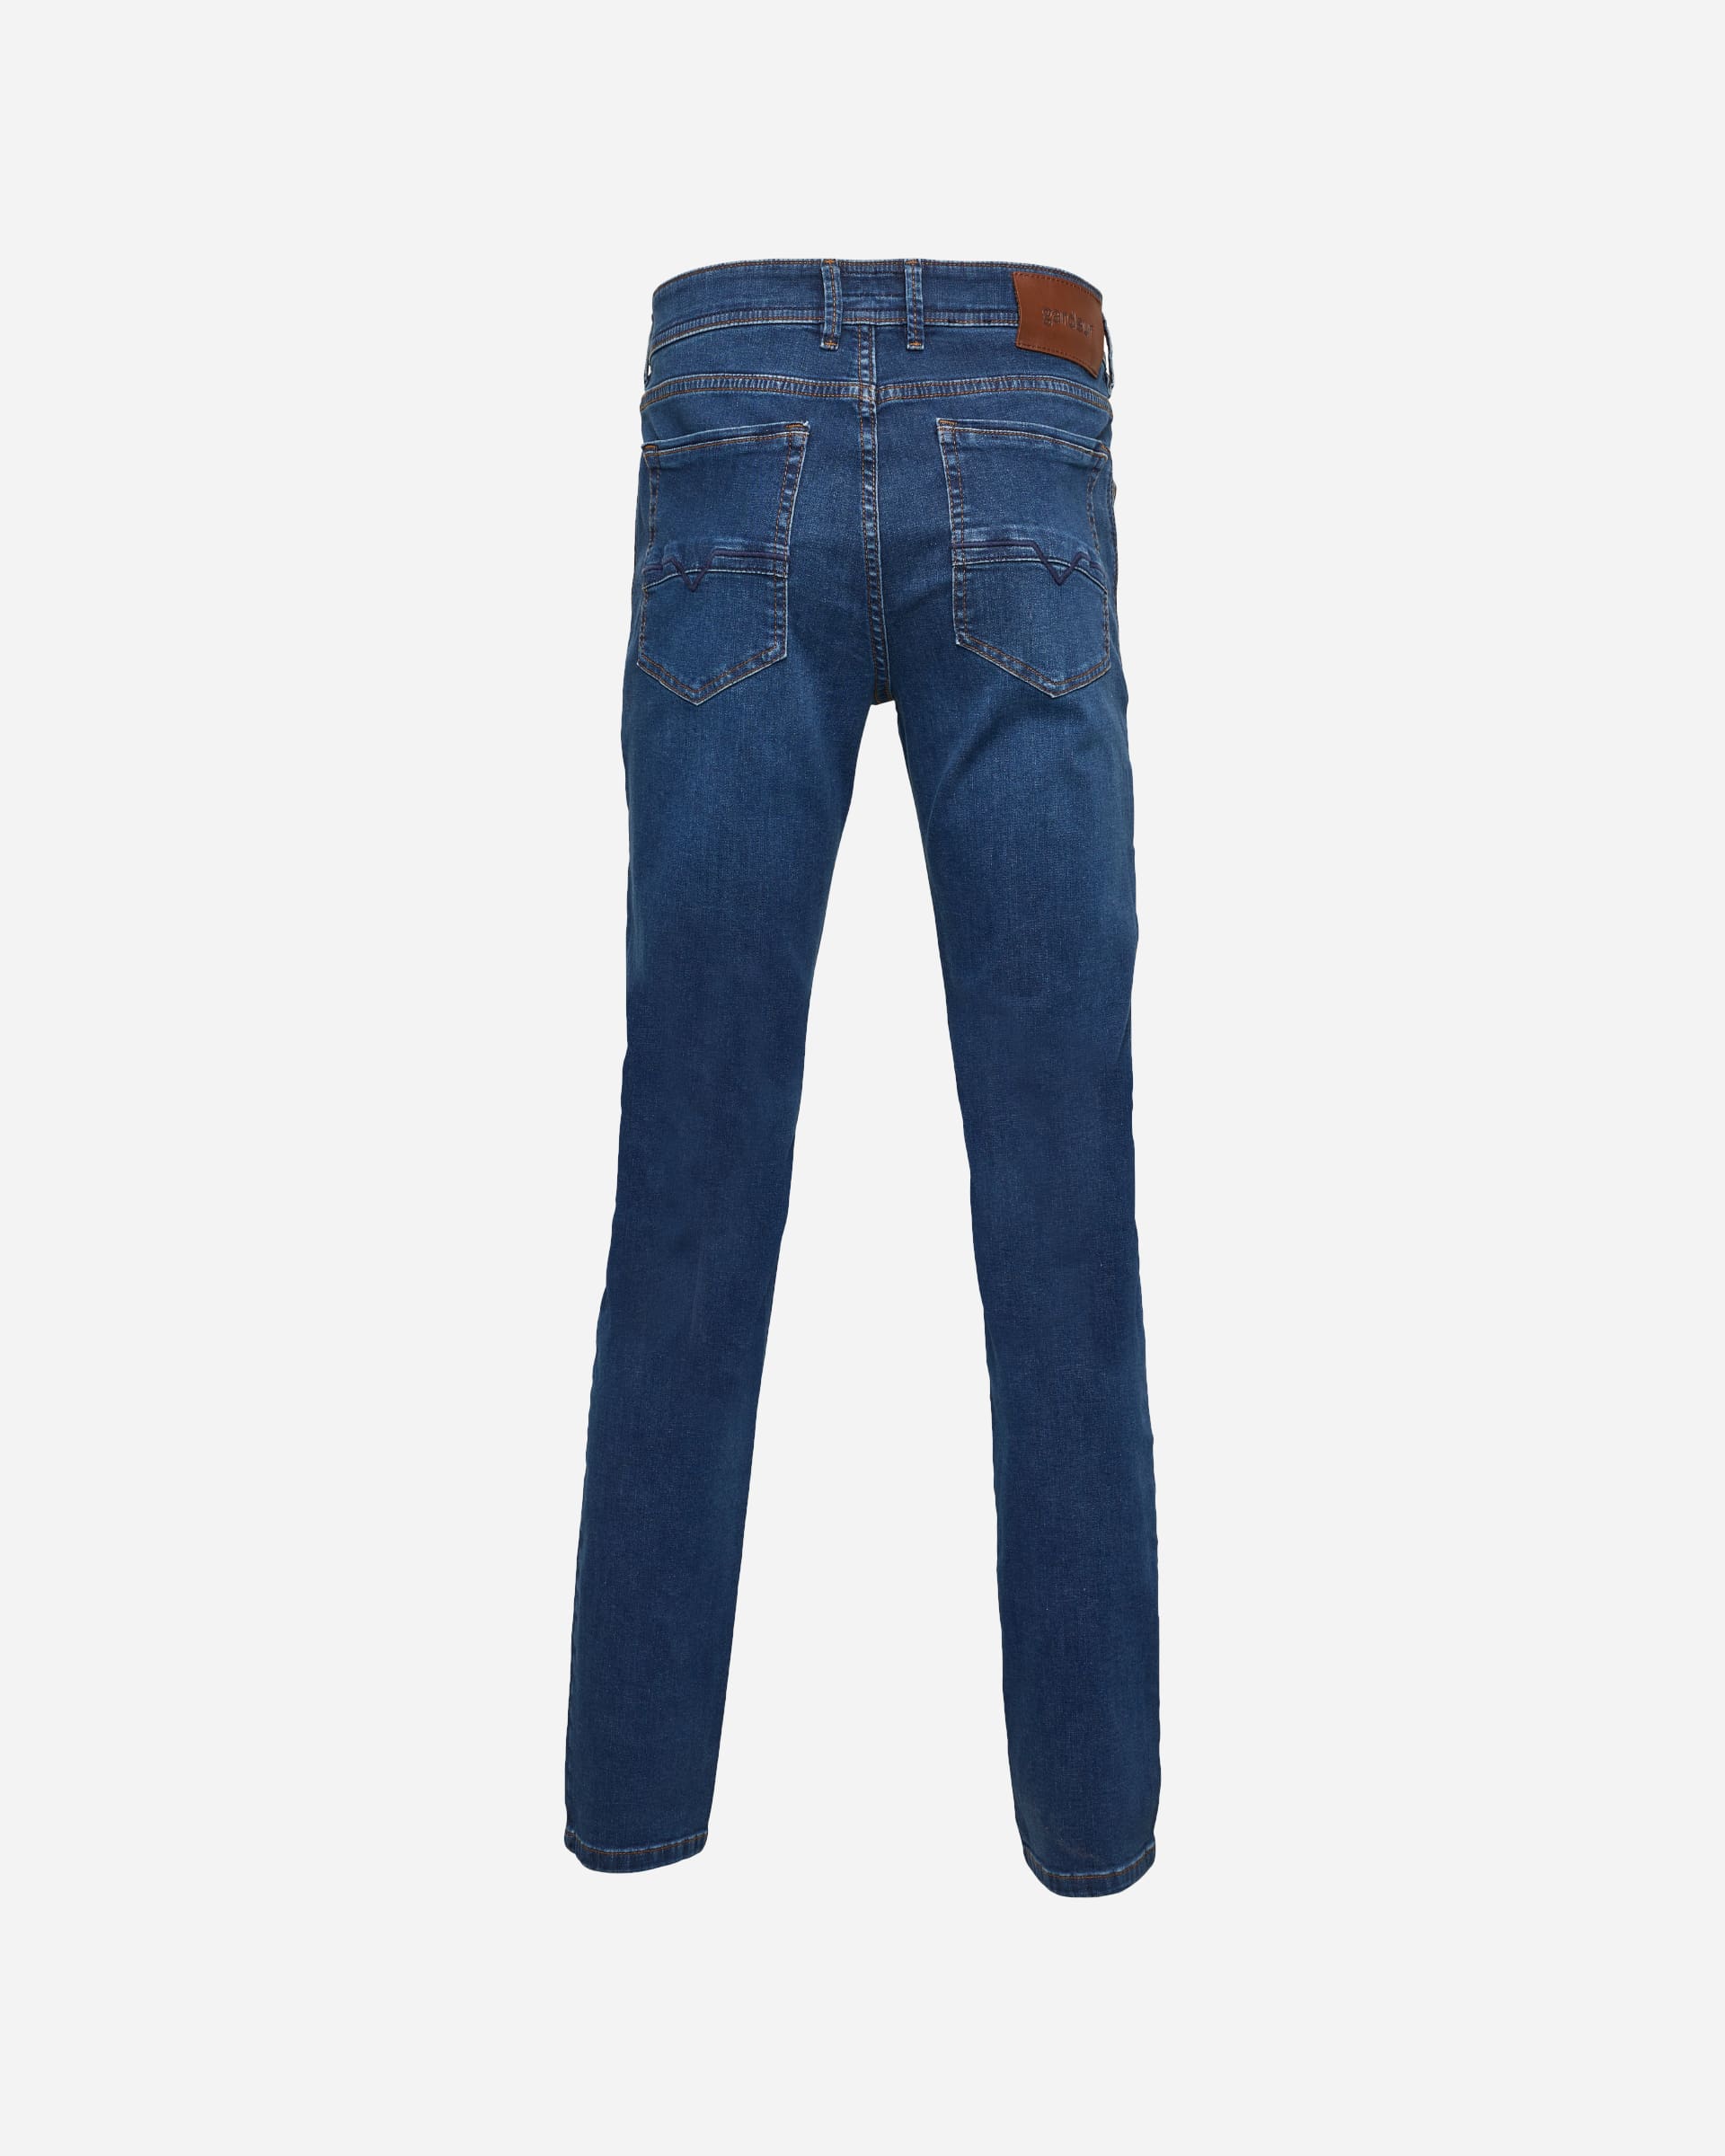 Gardeur BATU-4 Modern Jeans - Men's Jeans at Menzclub